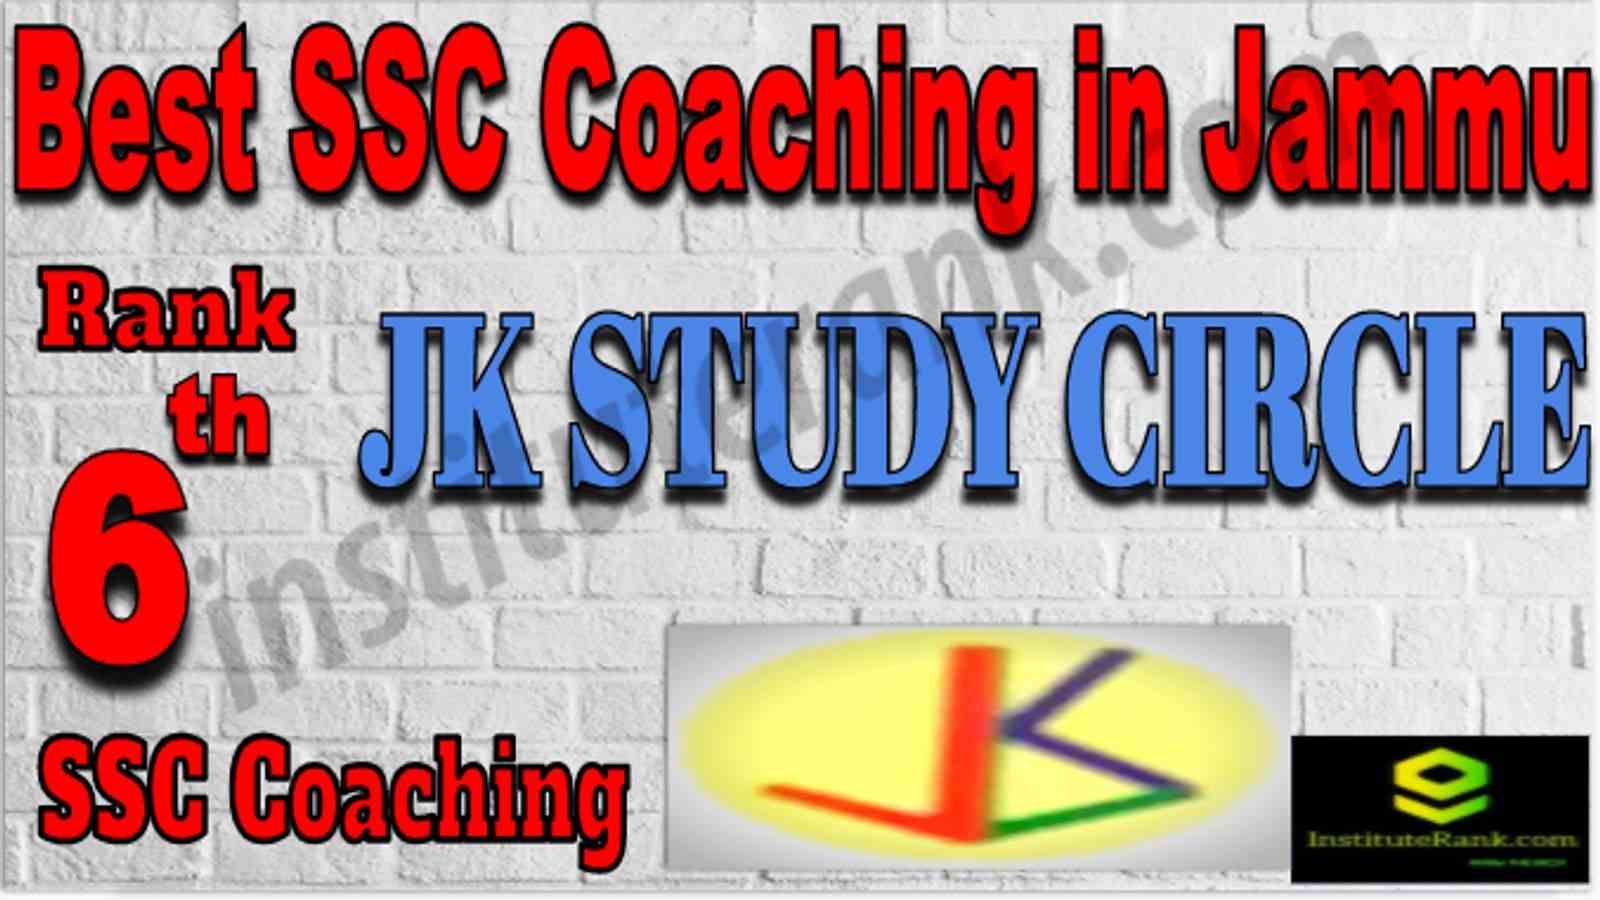 Rank 6 Best SSC Coaching in Jammu